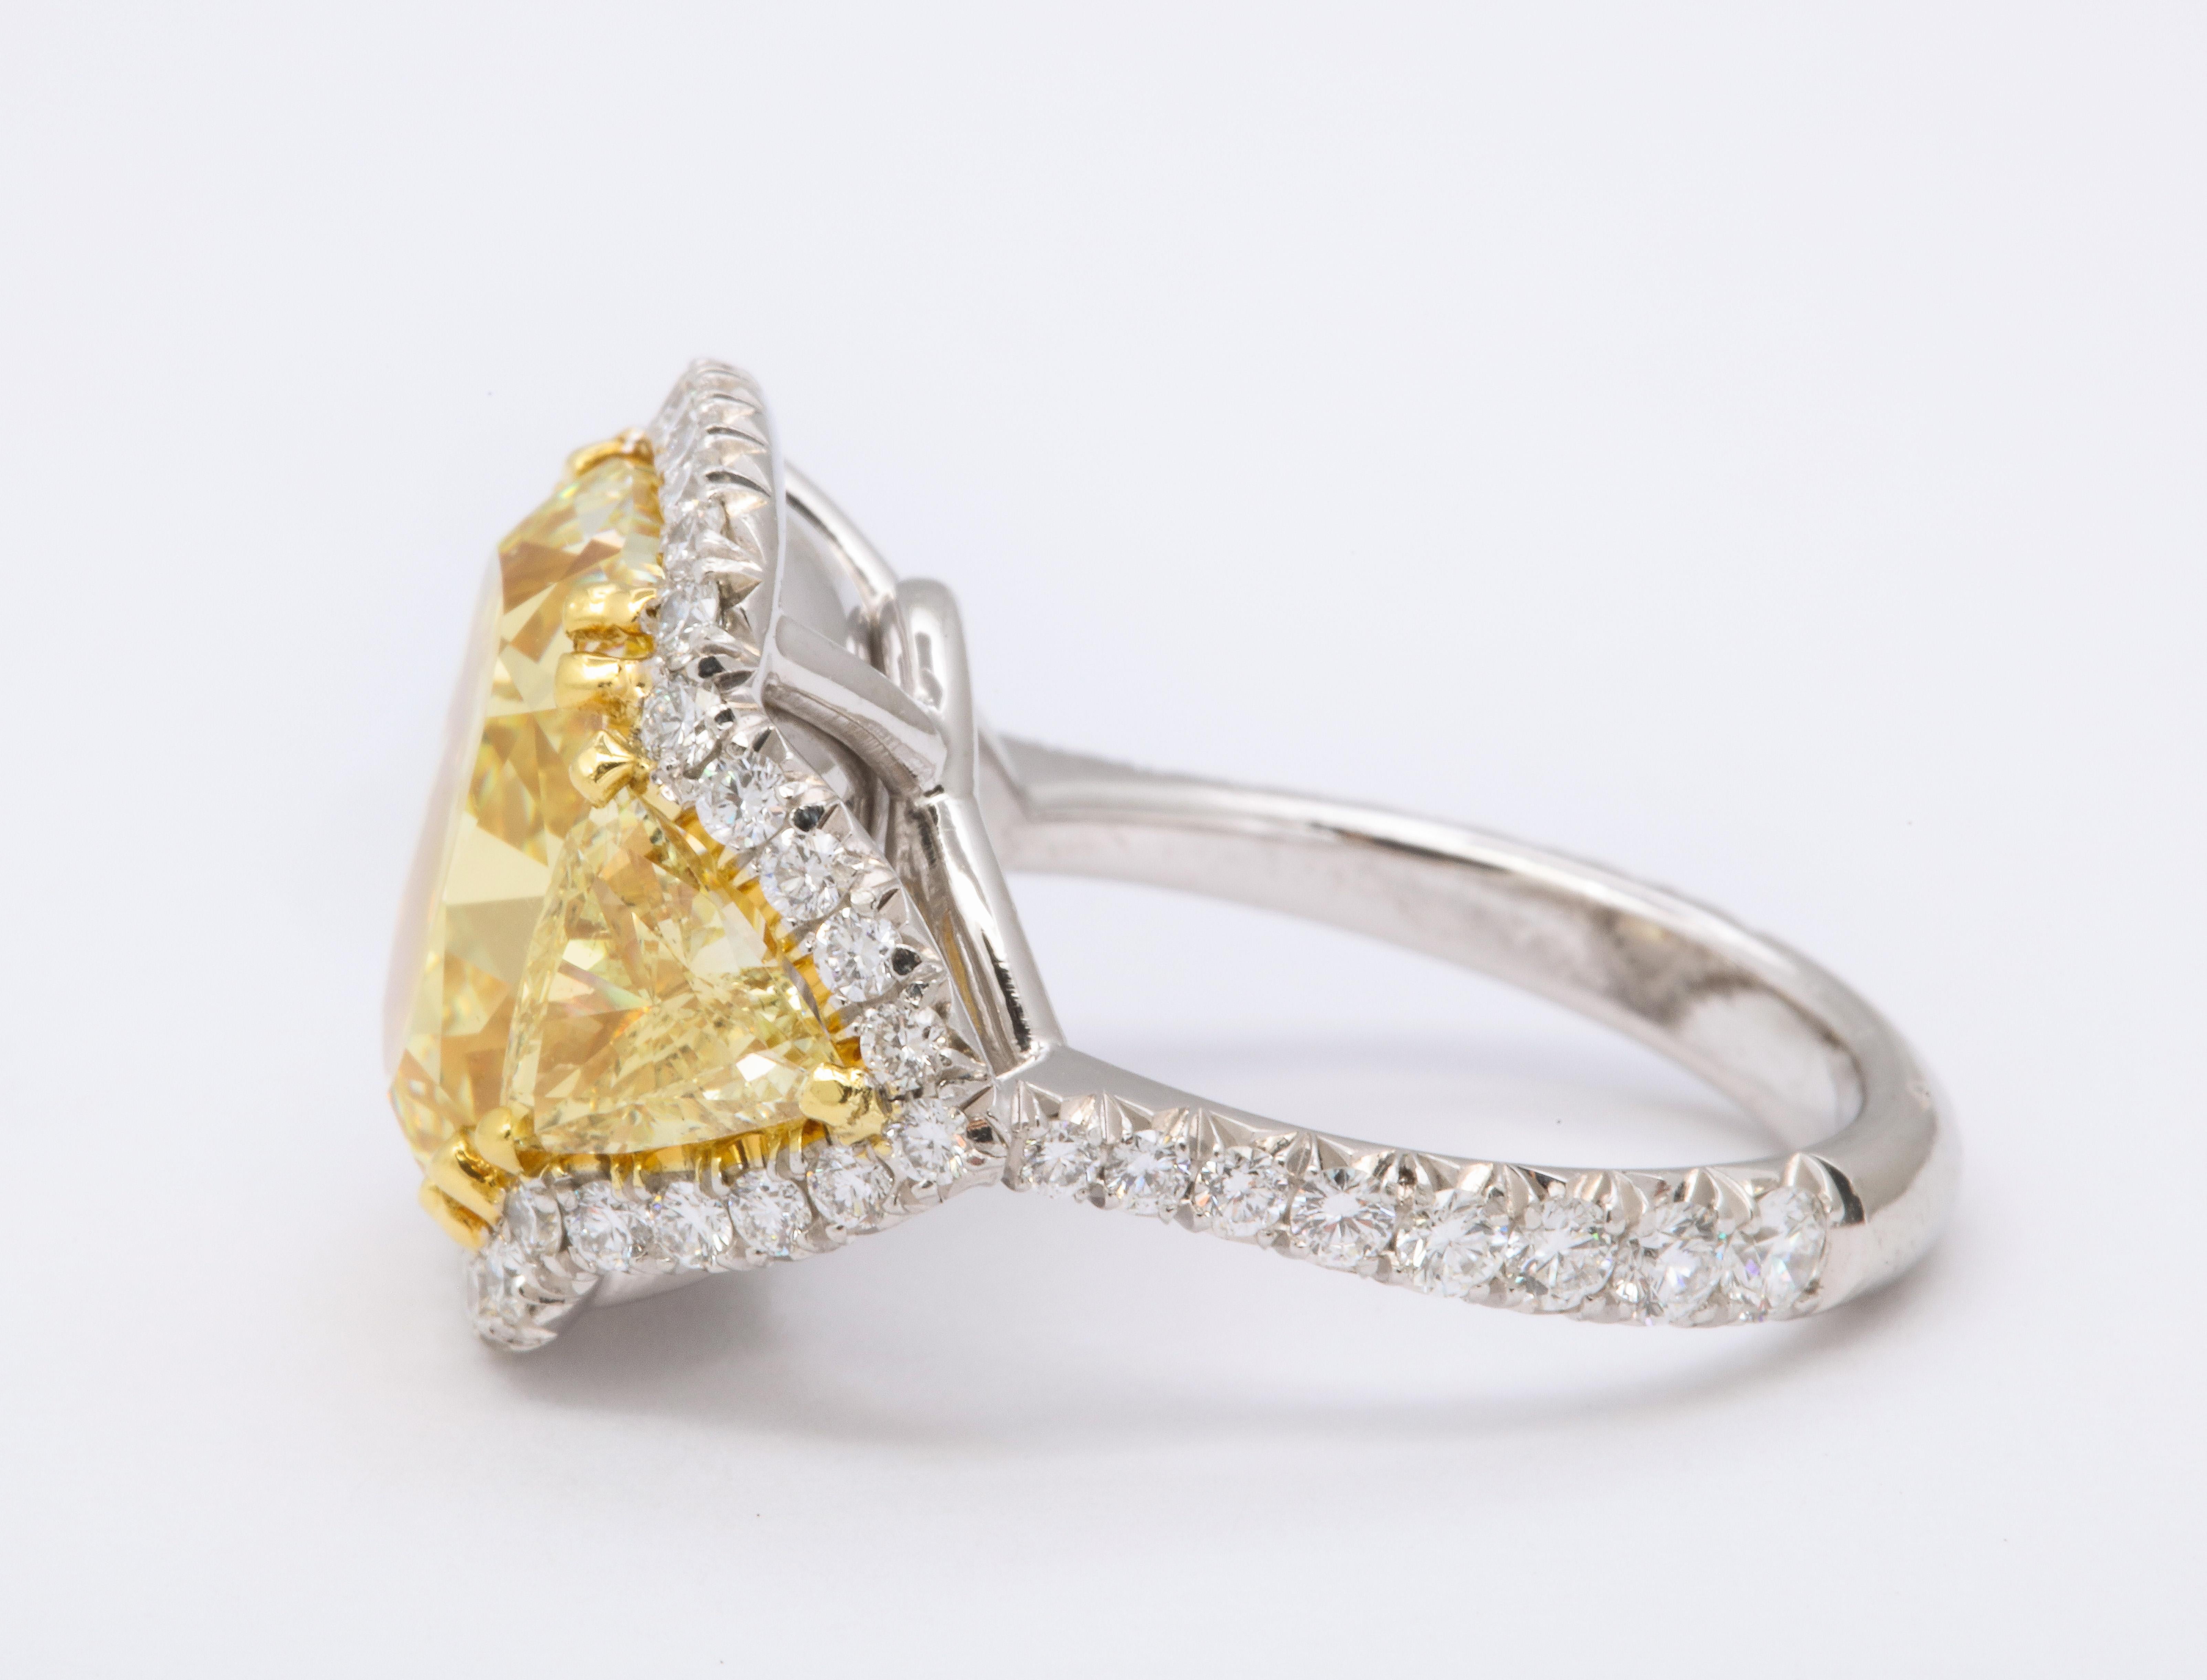 8 carat canary yellow diamond ring